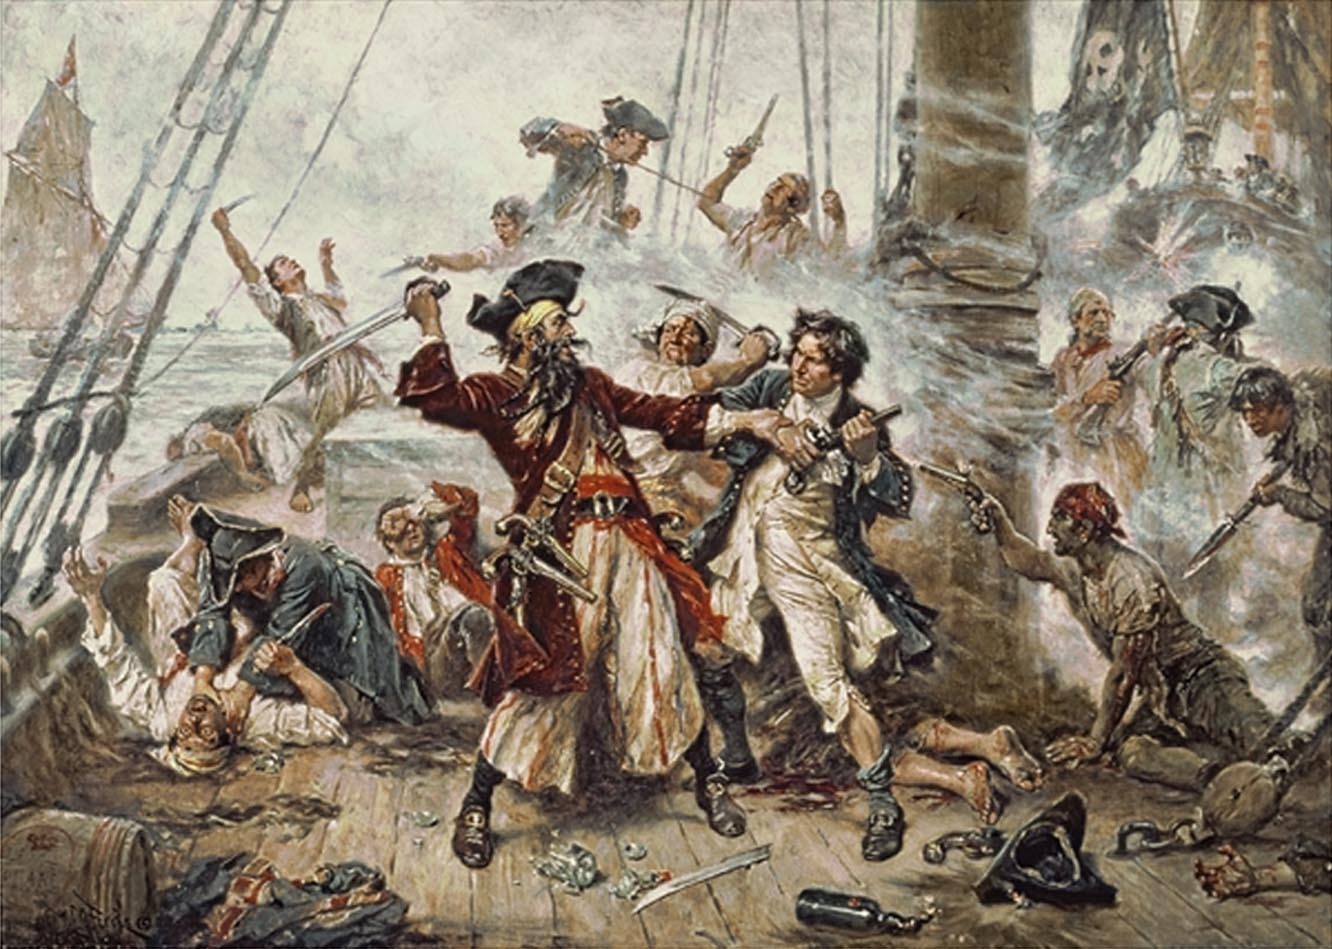 Pirate painting